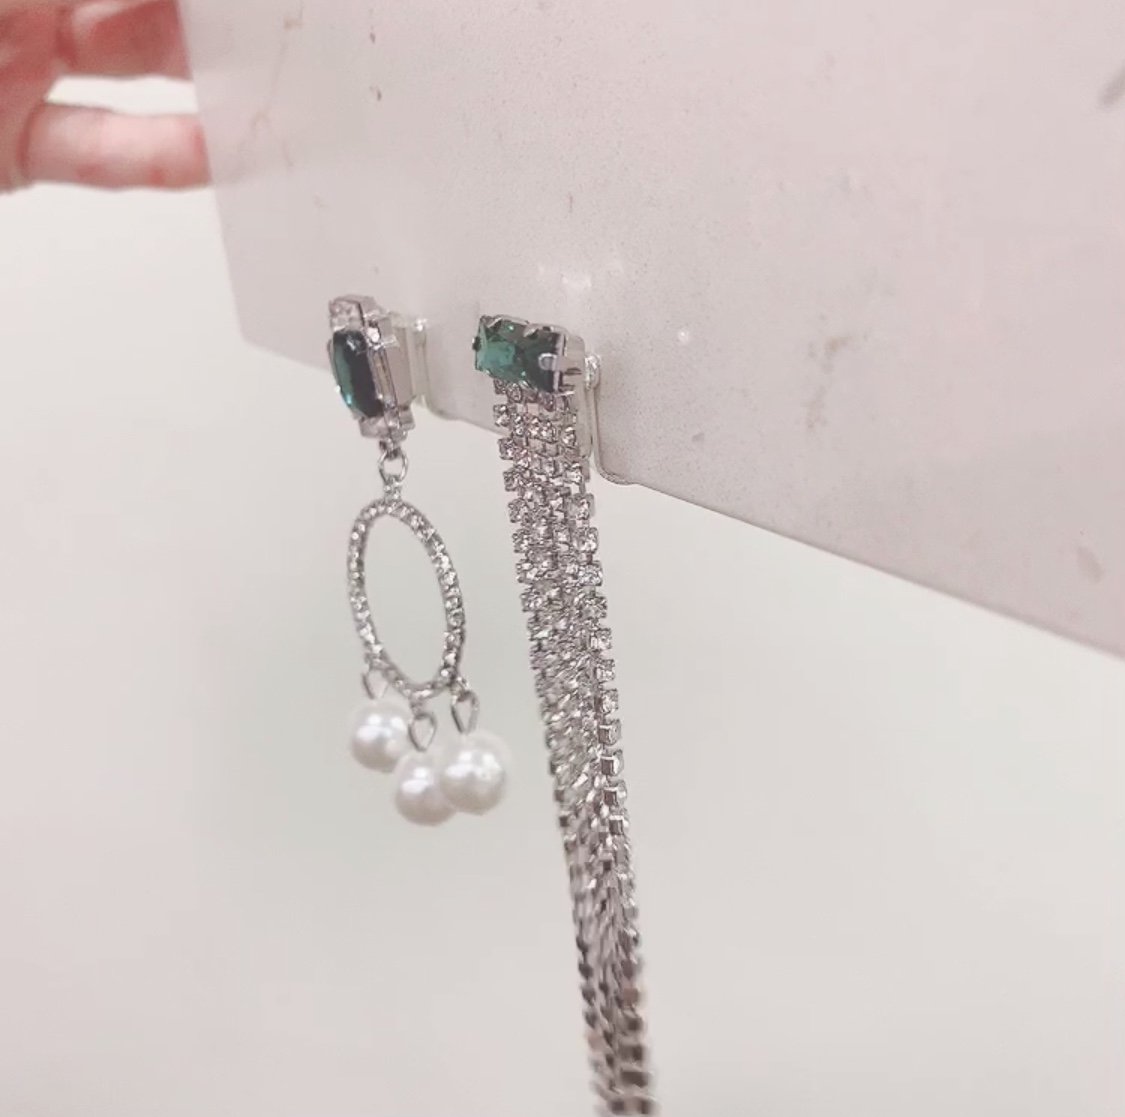 Emerald Queen 에메랄드 퀸 (Earring) - DAYBLANC